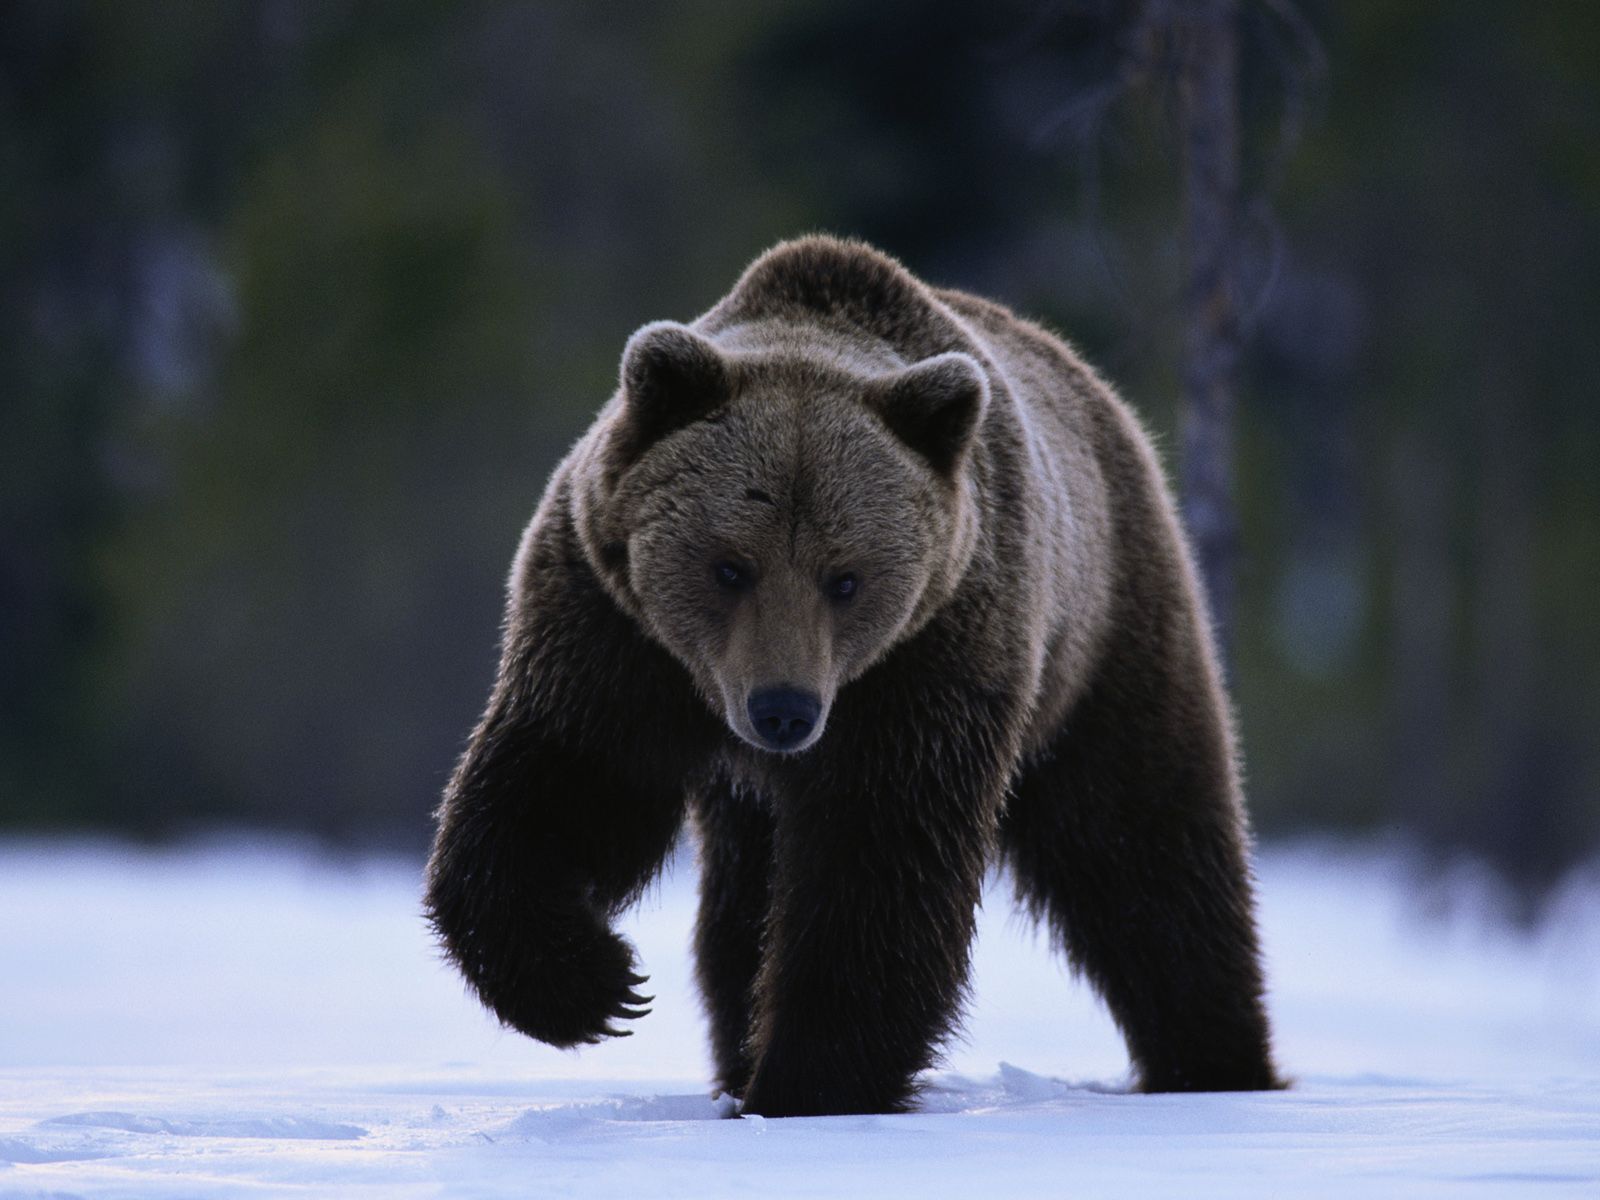 Brown bear in winter | The beauty of wildlife | Pinterest | Bears ...